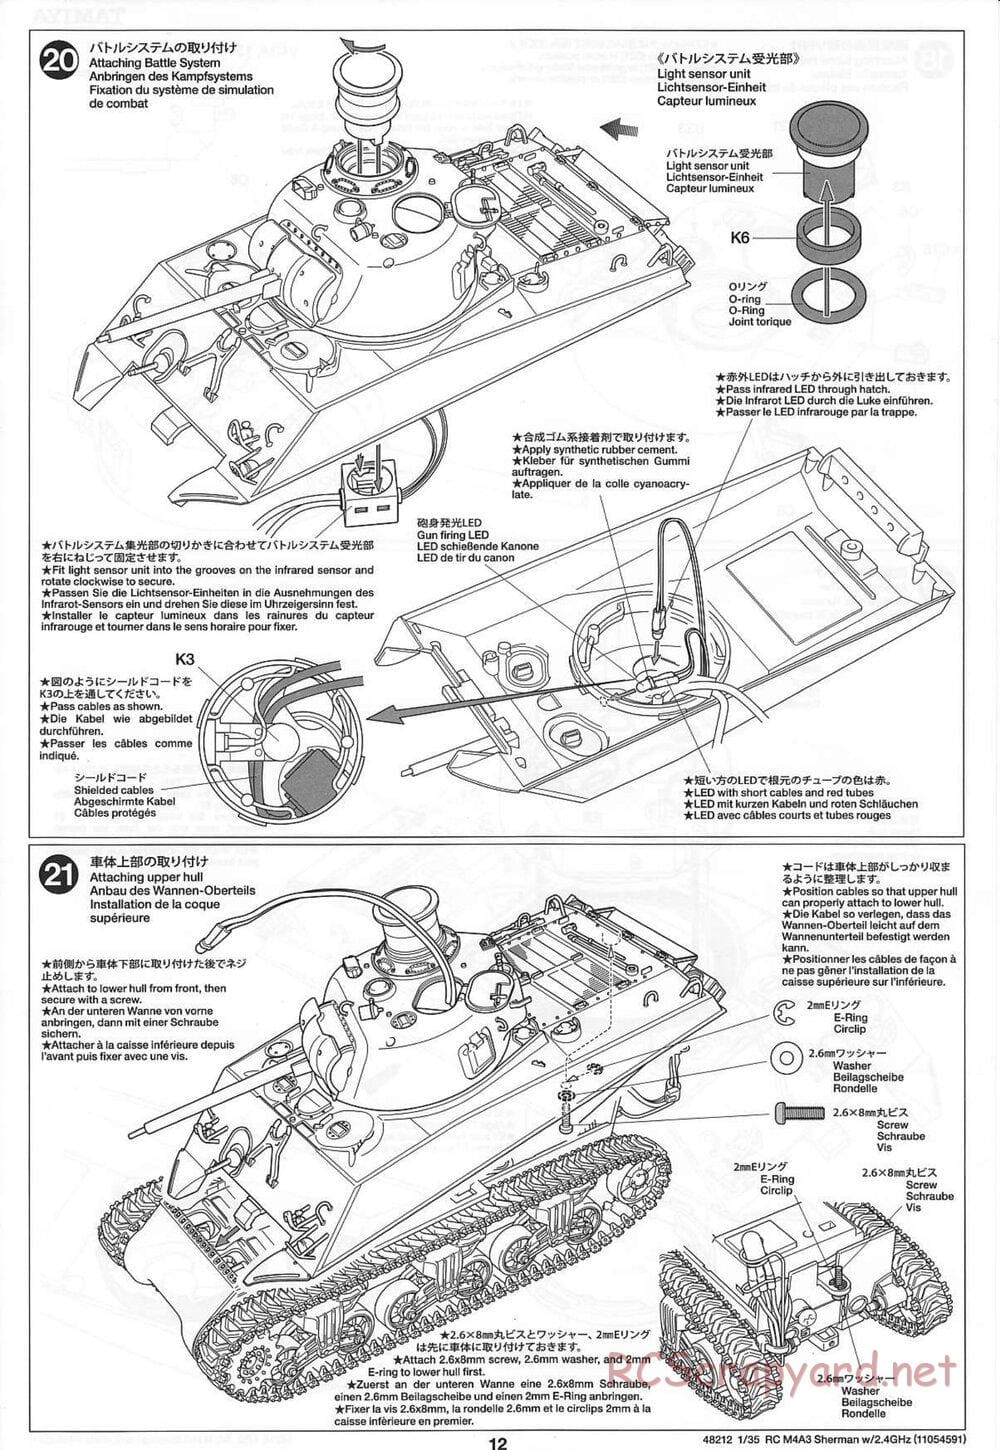 Tamiya - US Medium Tank M4A3 Sherman - 1/35 Scale Chassis - Manual - Page 12